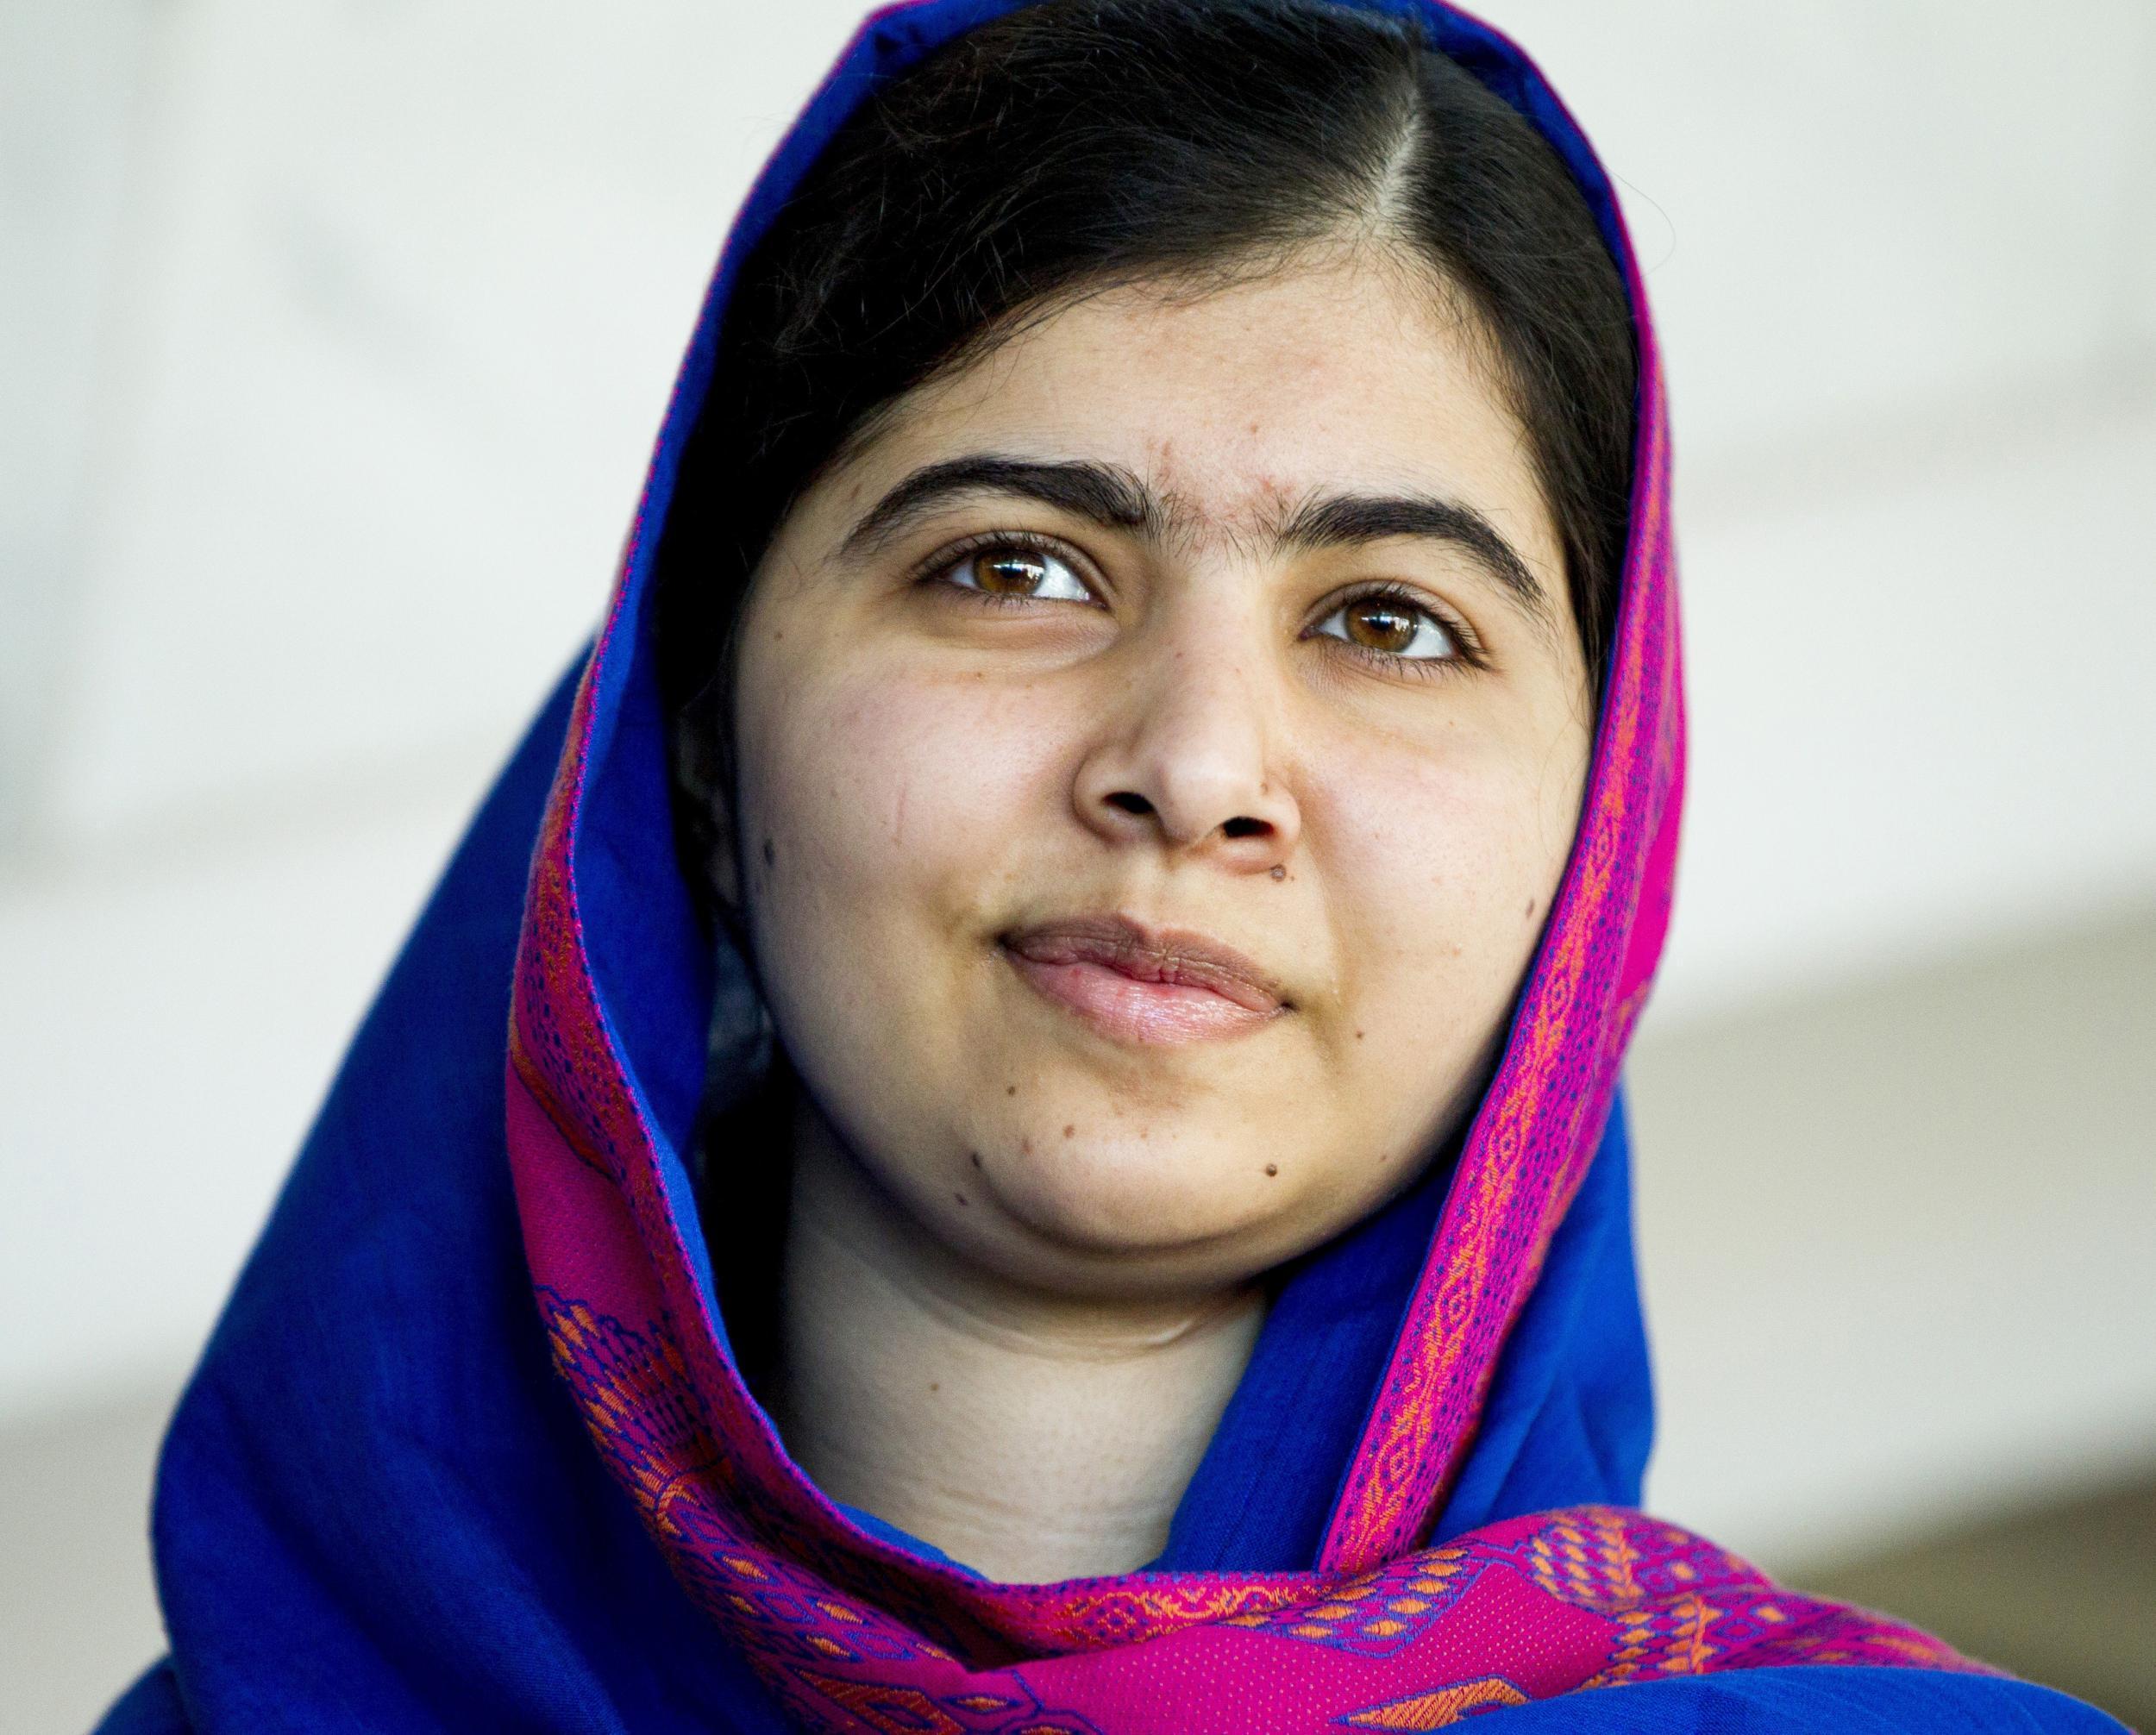 Malala Yousafzai was criticised over an unverified image